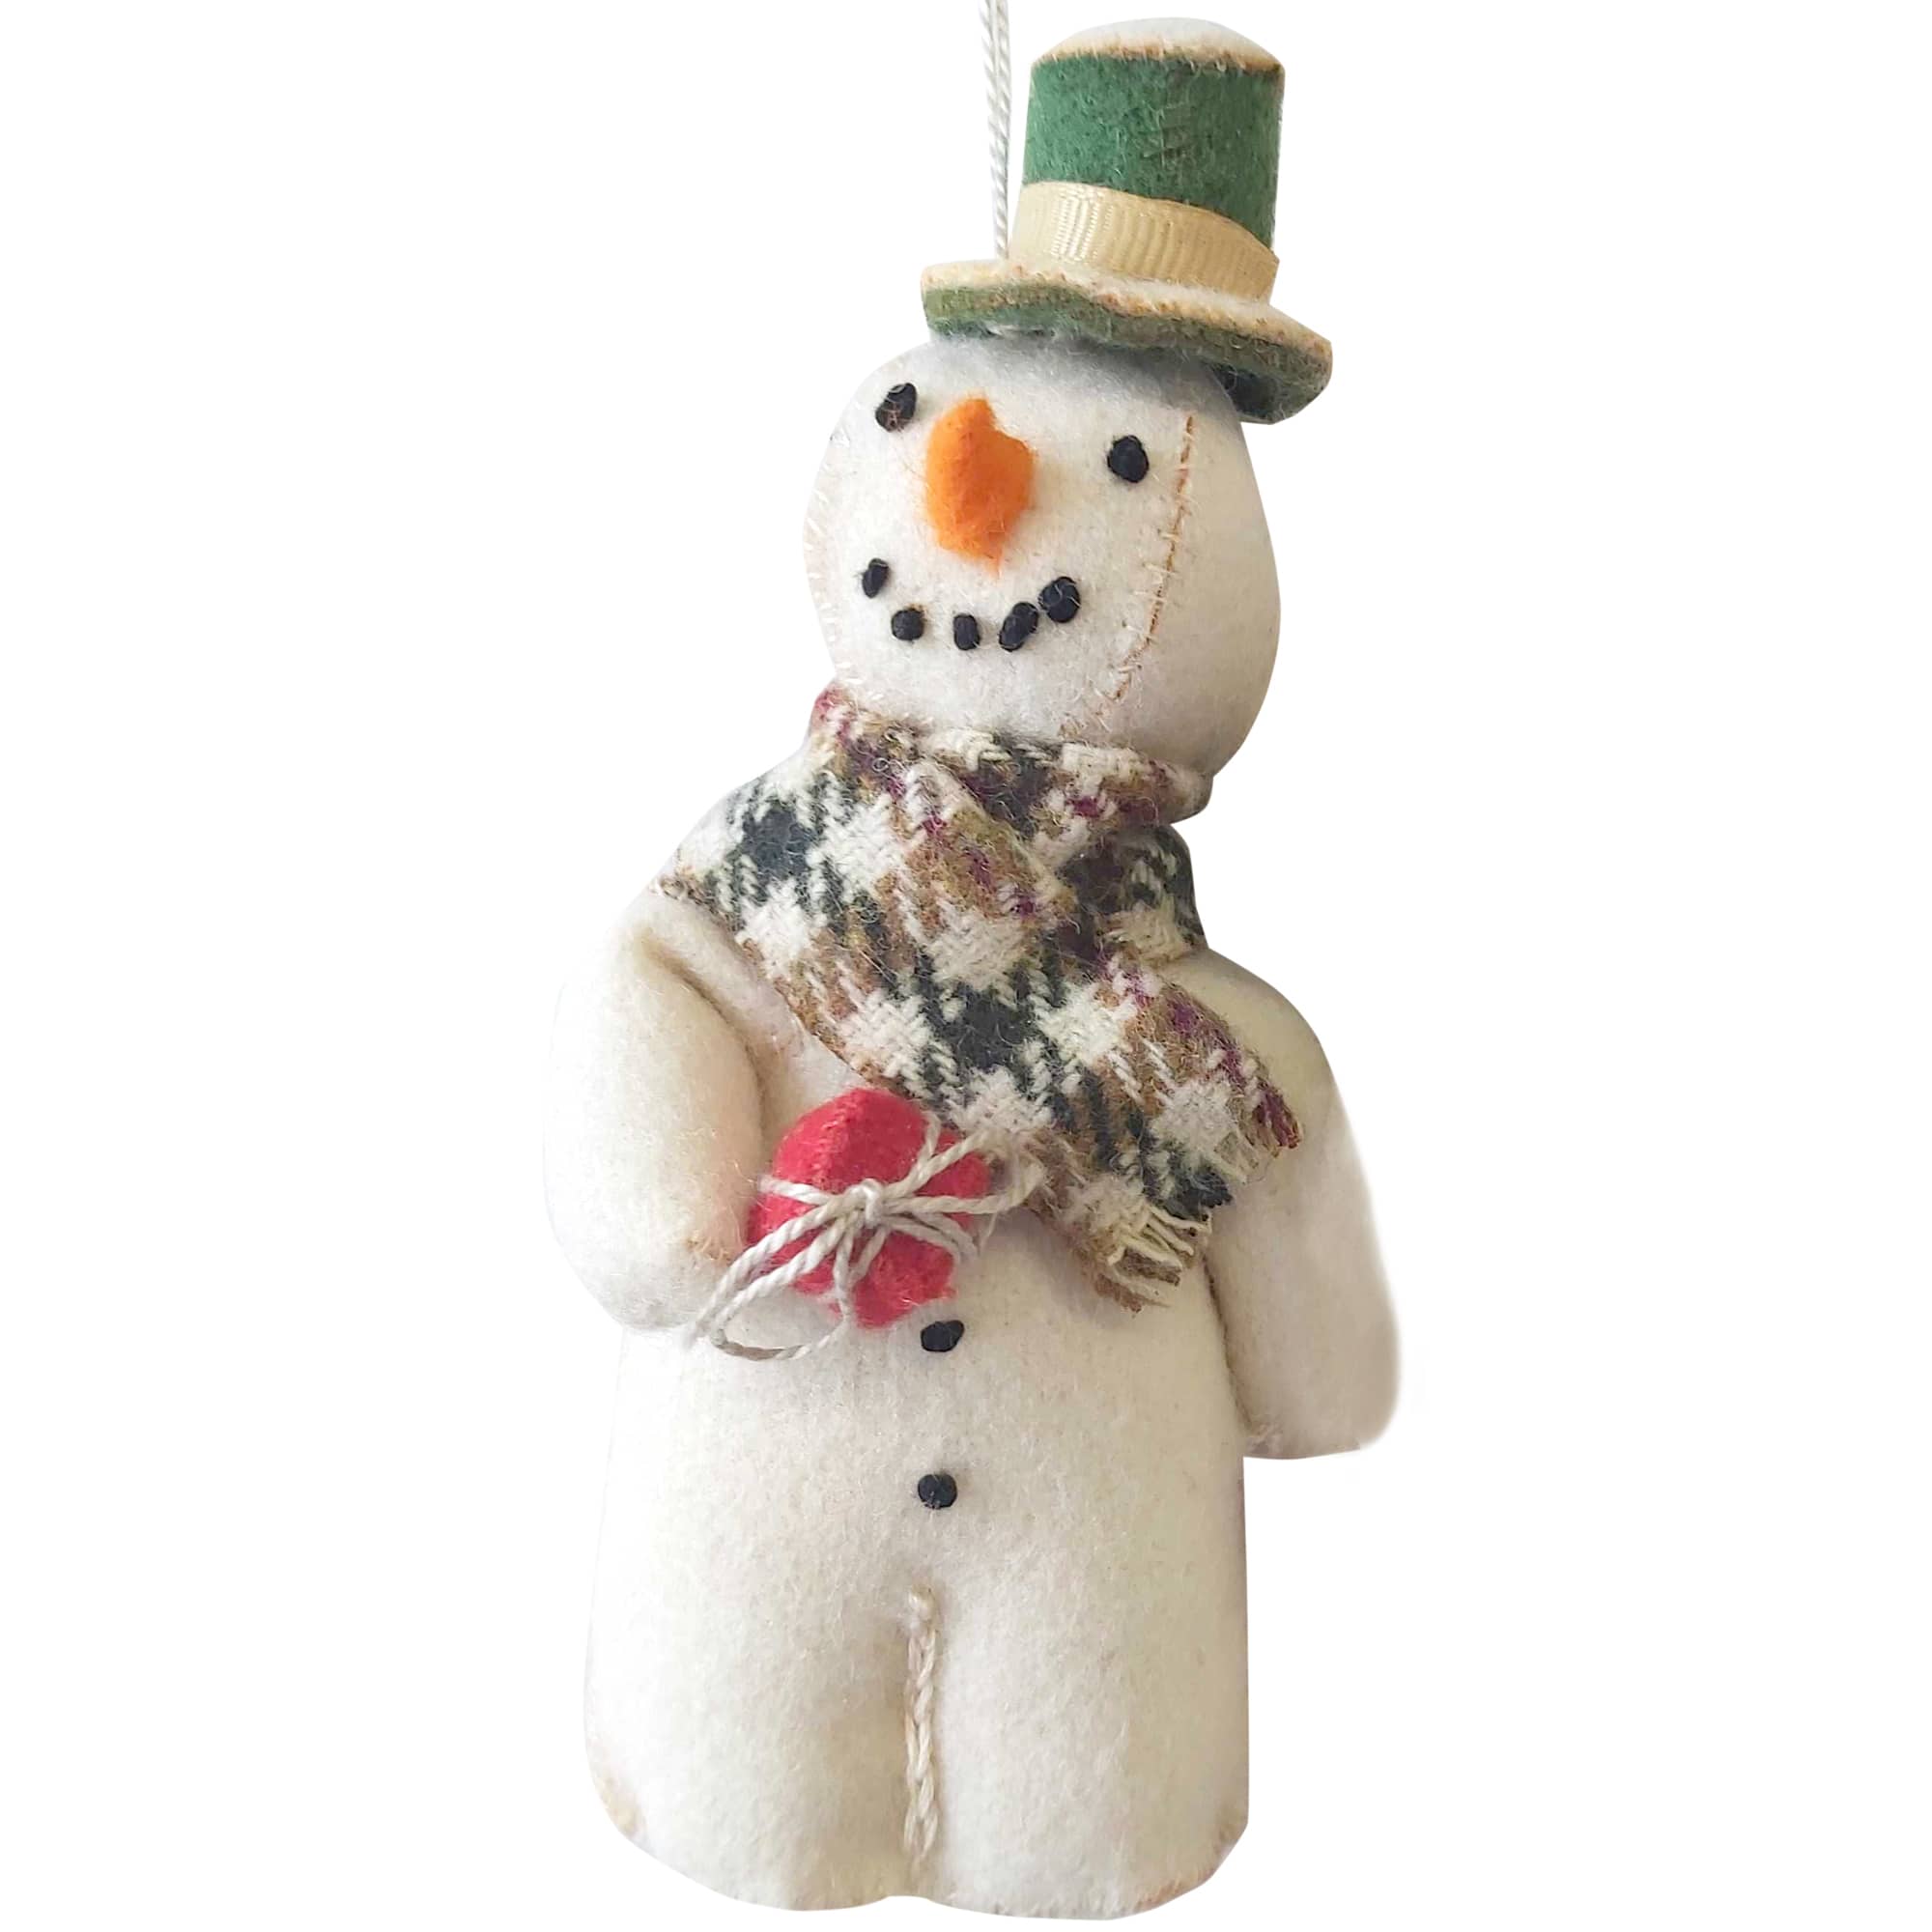 Fine-Cell-Work-Sid-the-Snowman-Handmade-Charity-Christmas-Decoration-White-Tweed-Green.jpg